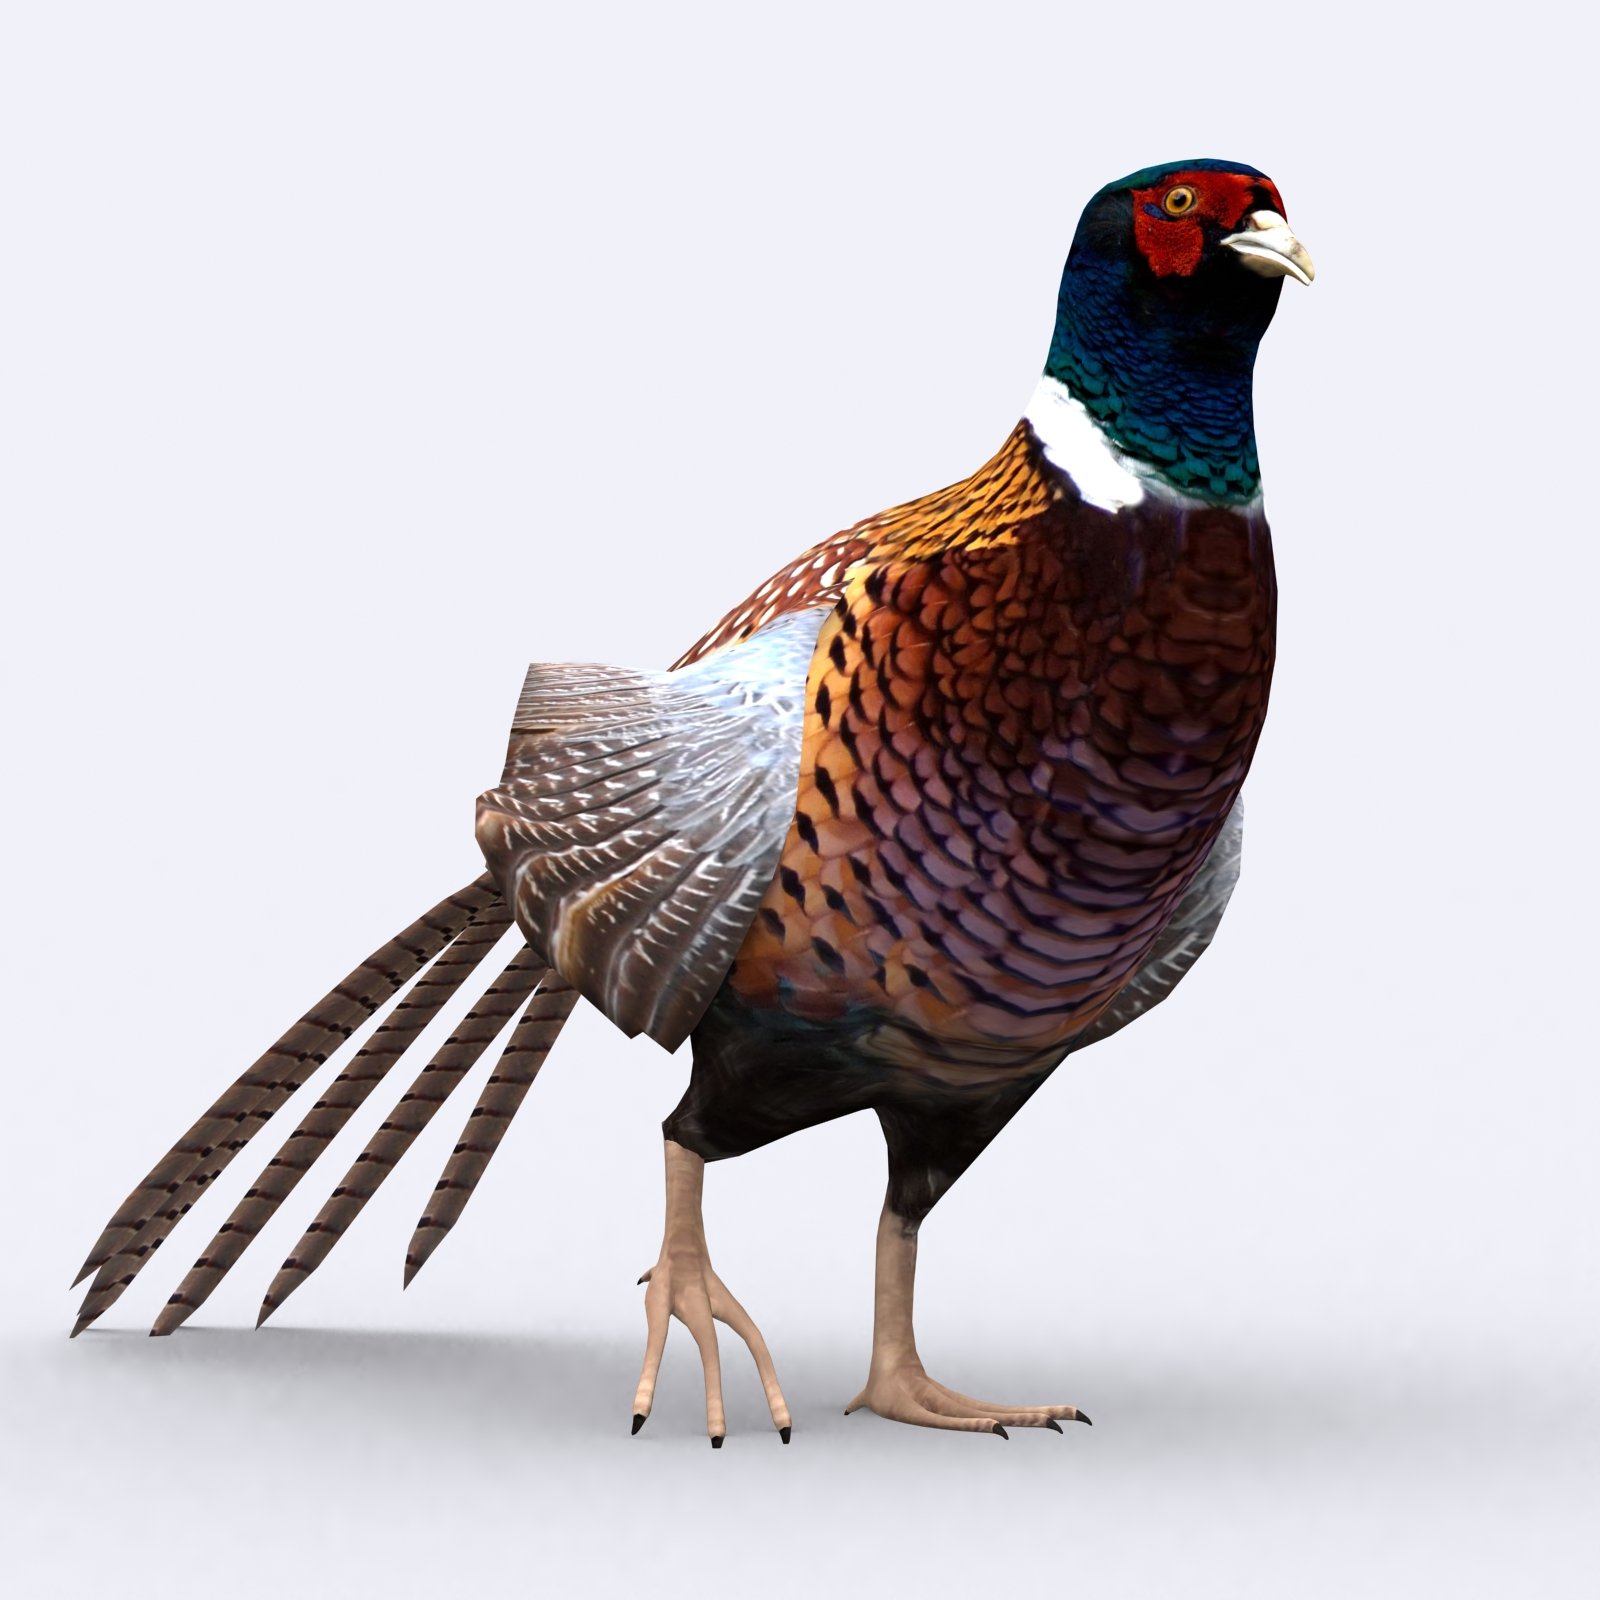 3DRT - Animals - Pheasant preview image.